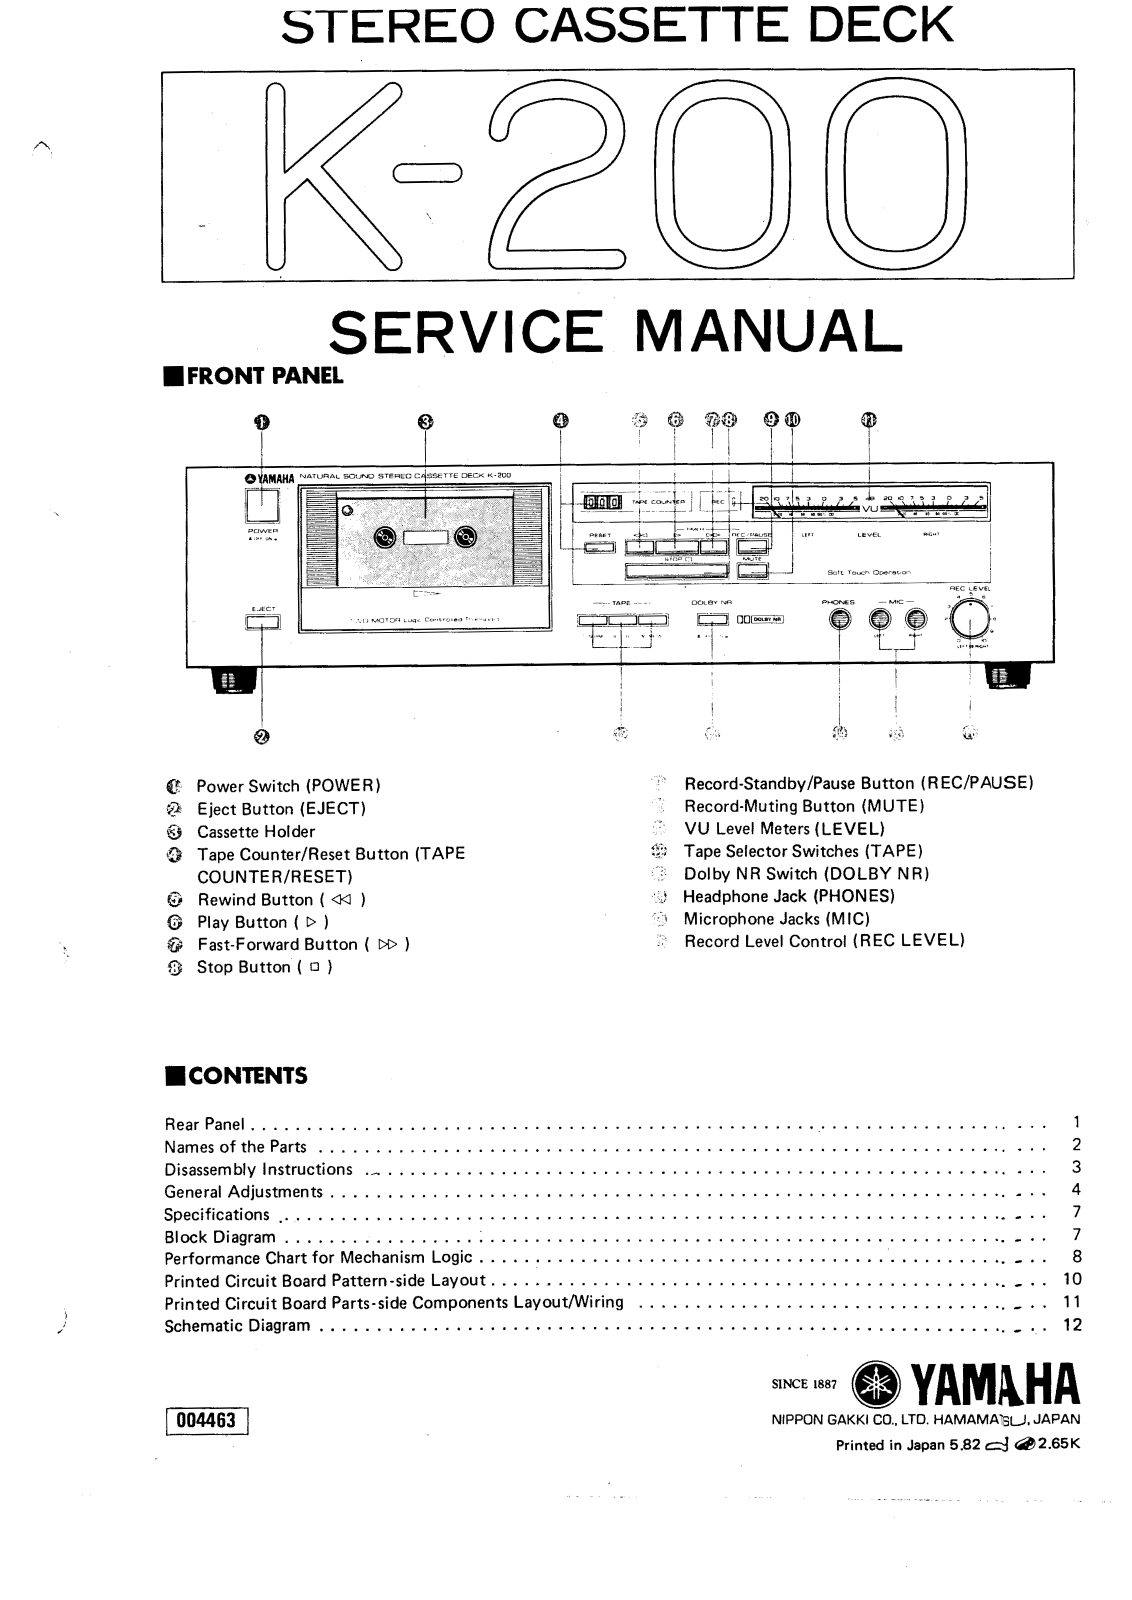 Yamaha K-200 Service Manual